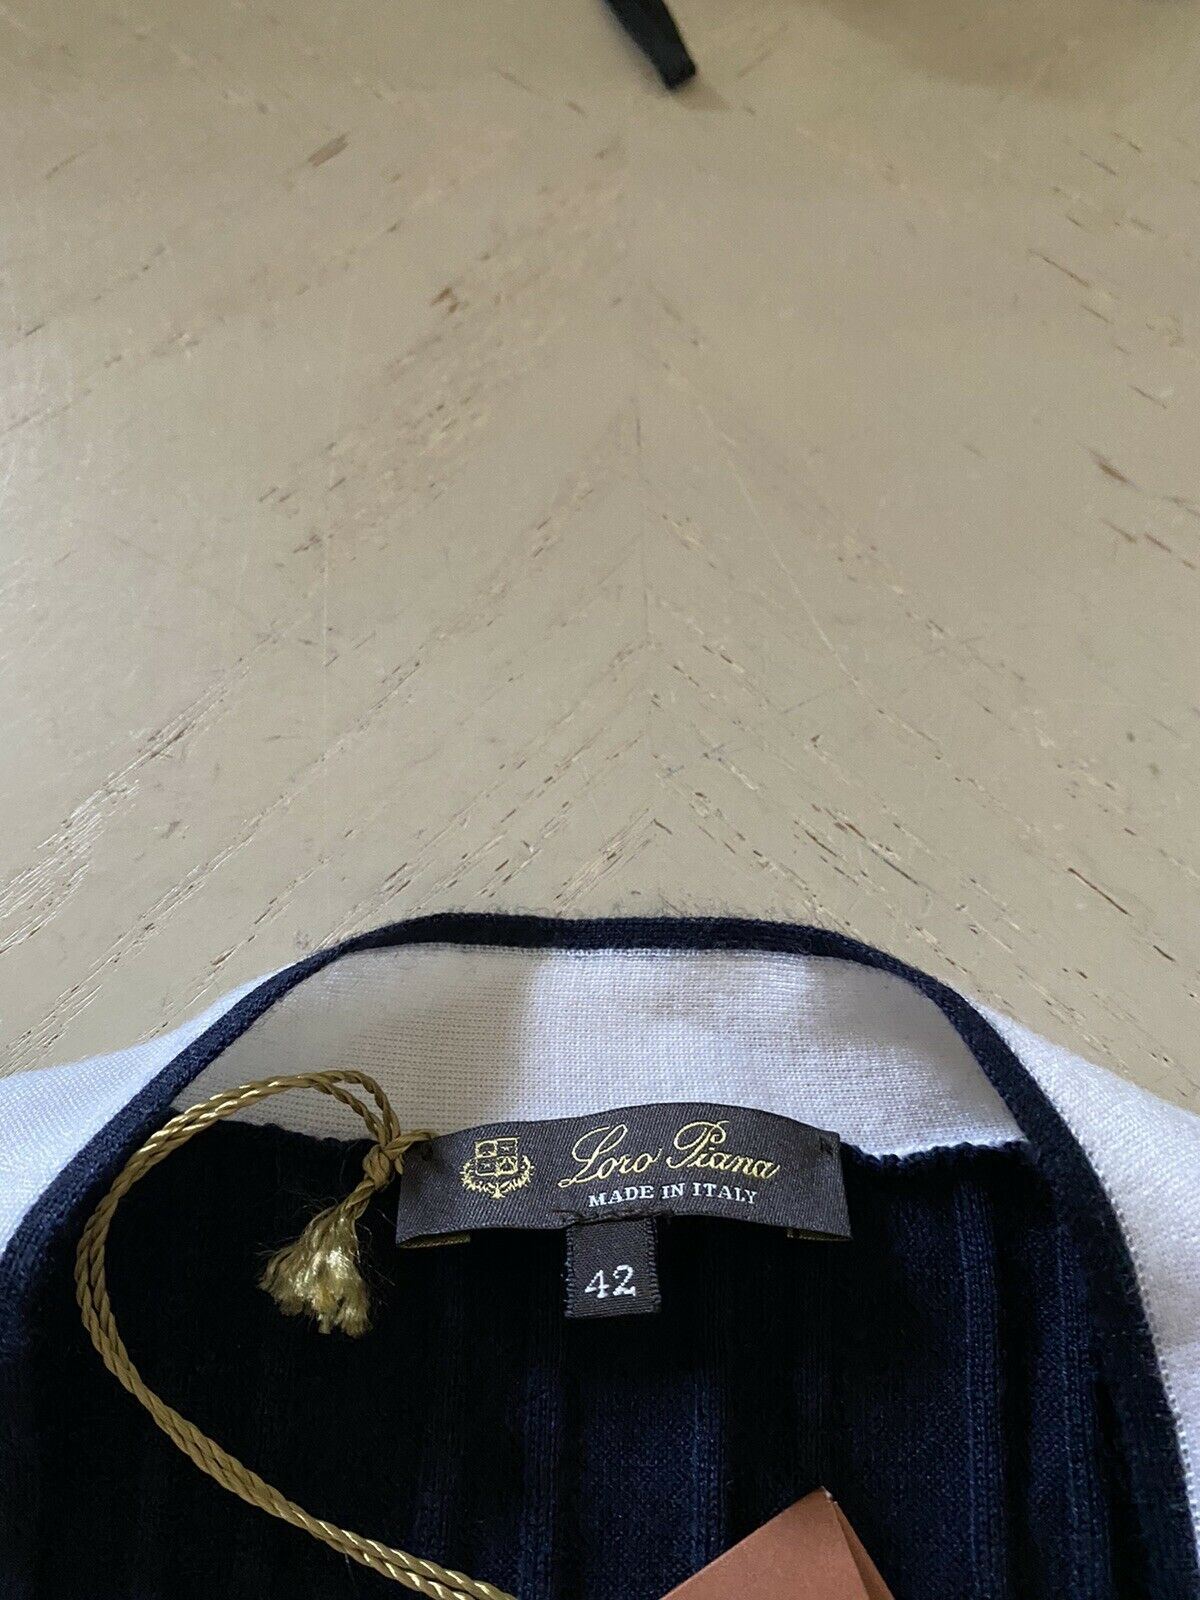 New $1650 Loro Piana Women Cashmere/Silk Knit Cardigan Sweater Navy/White US 4